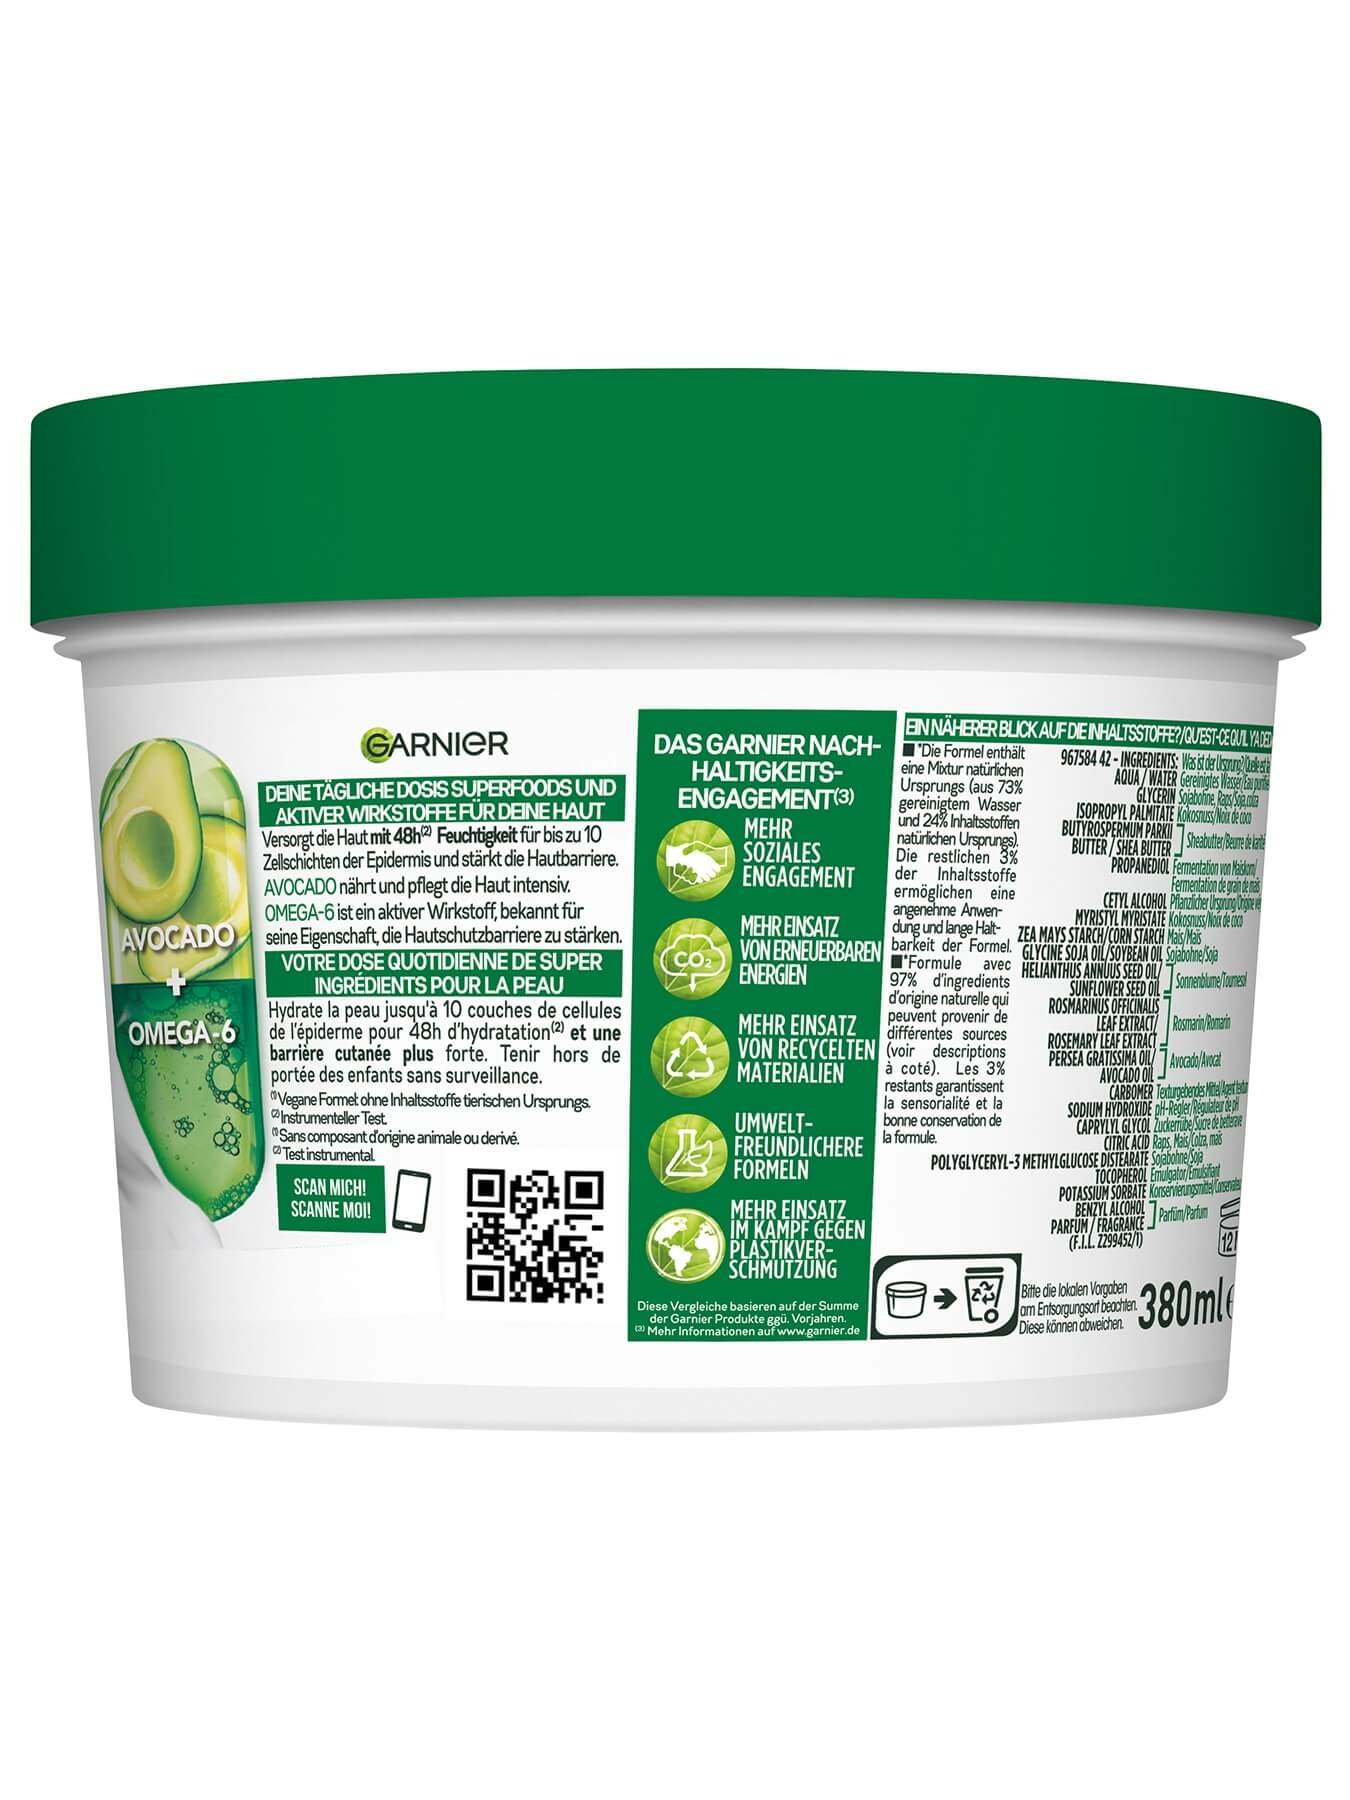 Body Superfood Körperpflege nährende Creme mit Avocado - Produktabbildung